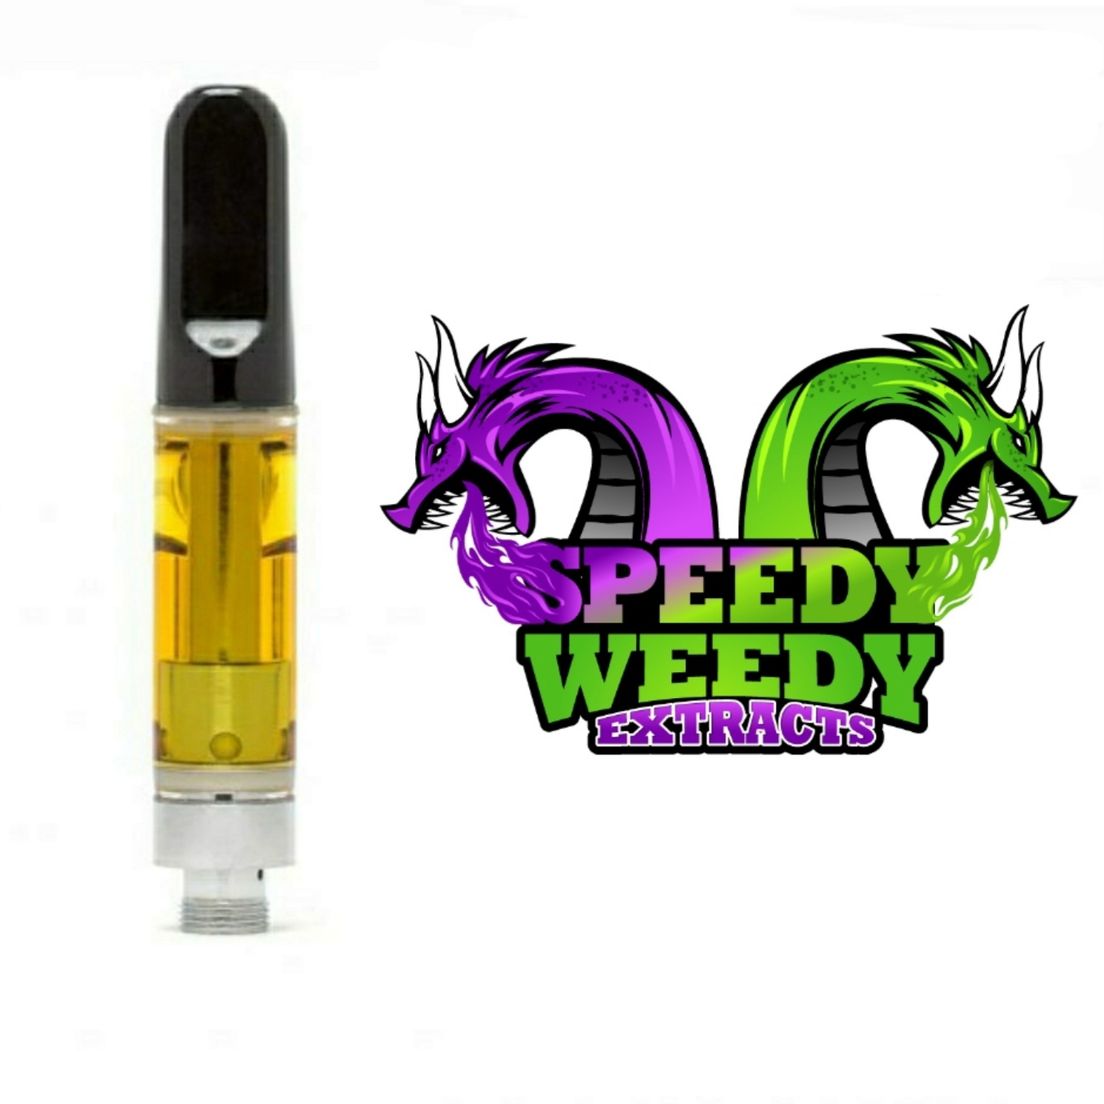 1. Speedy Weedy 1g THC Vape Cartridge - Bubba Kush (I) 3/$60